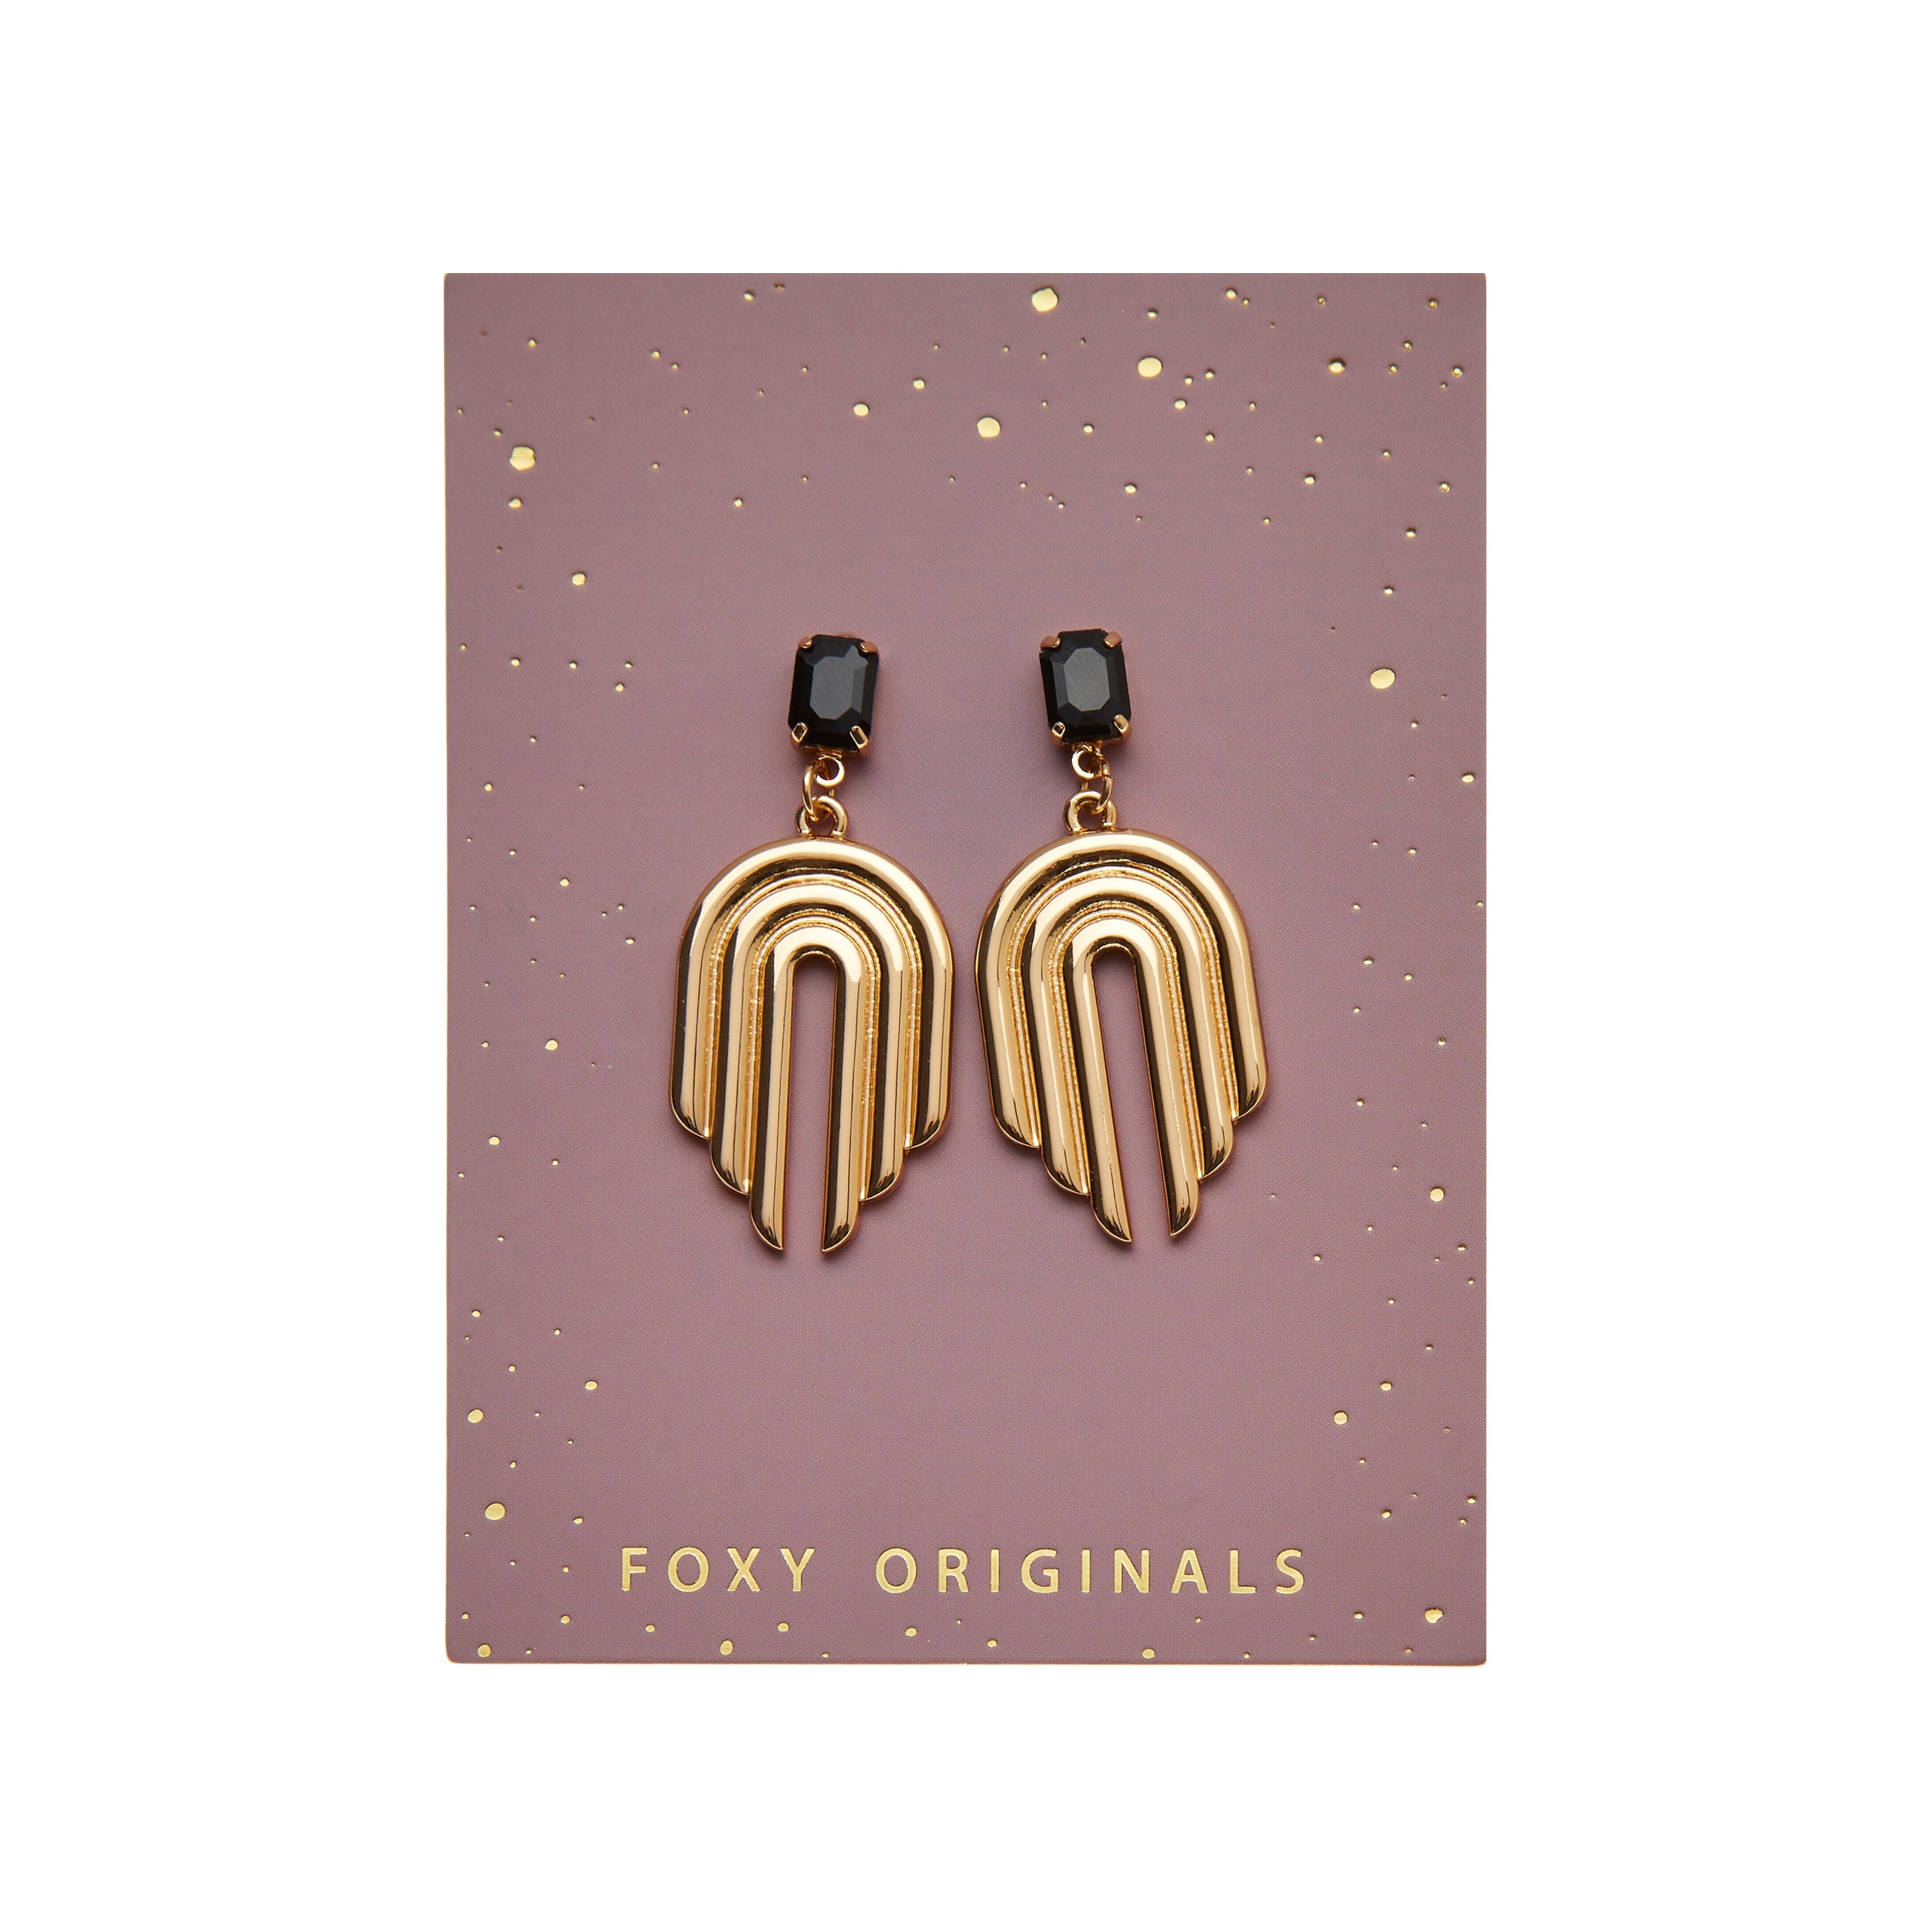 Foxy Originals "Ginger" Earrings